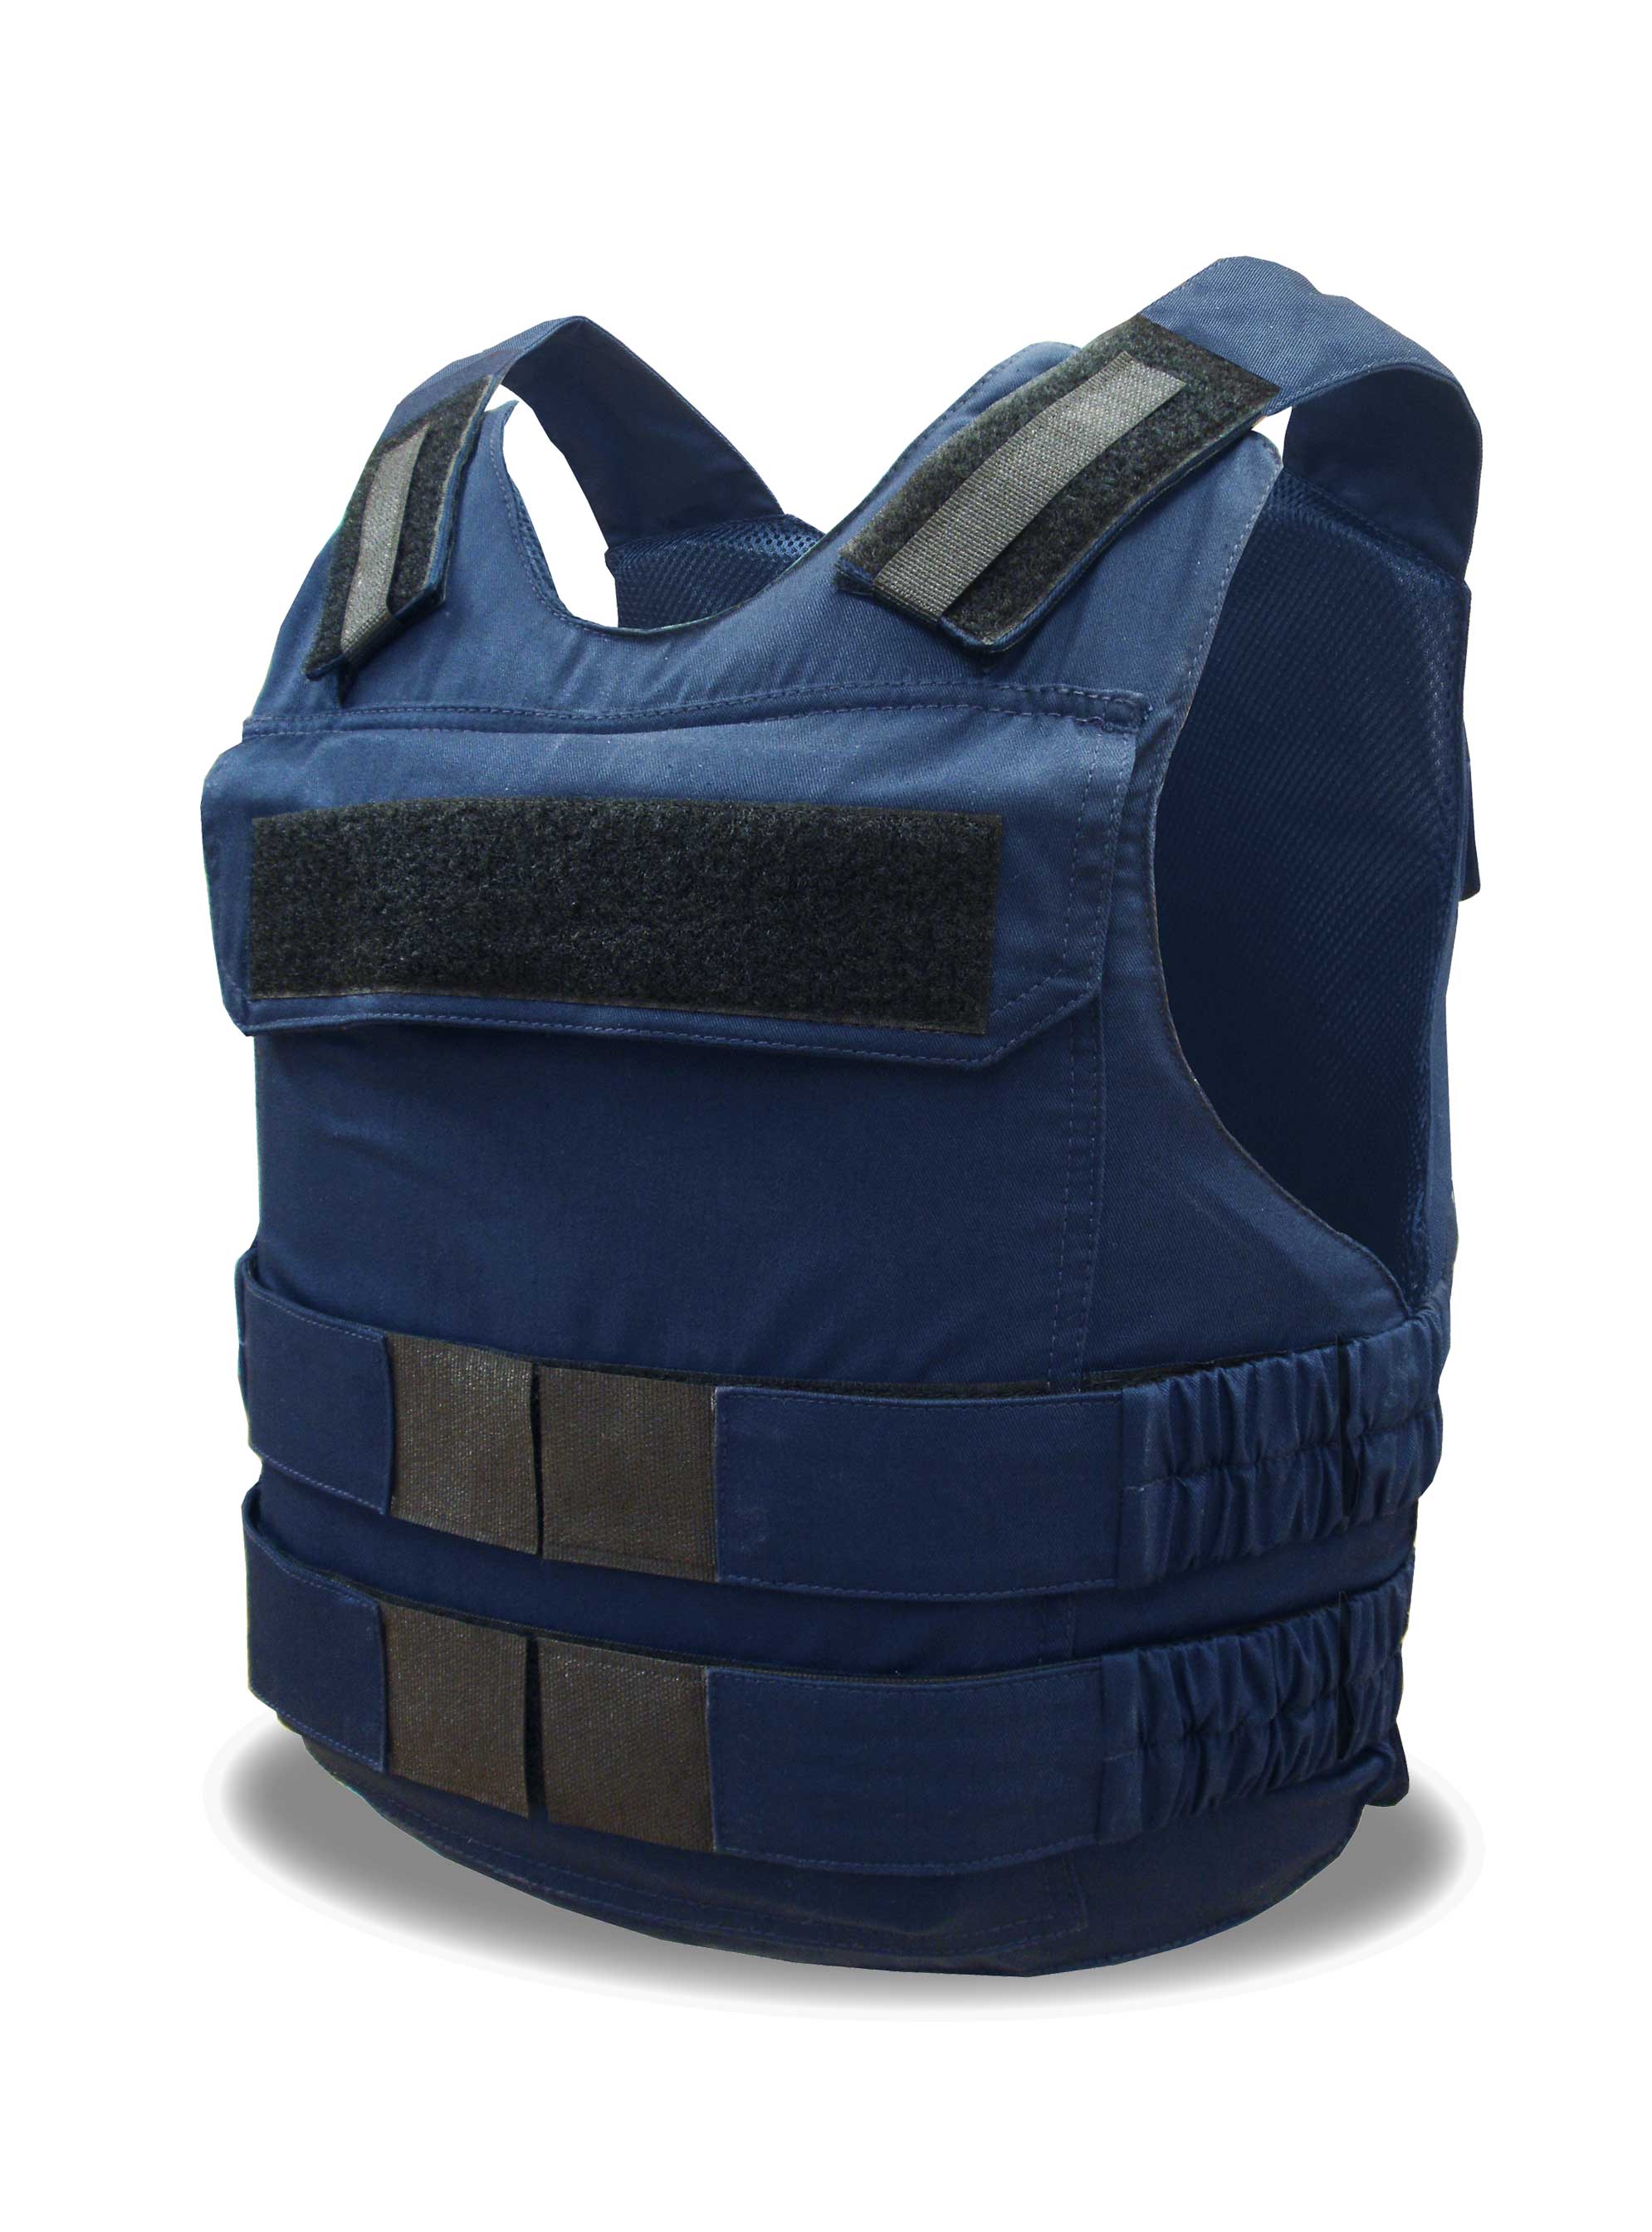 Image result for bullet proof vests and plastic helmets